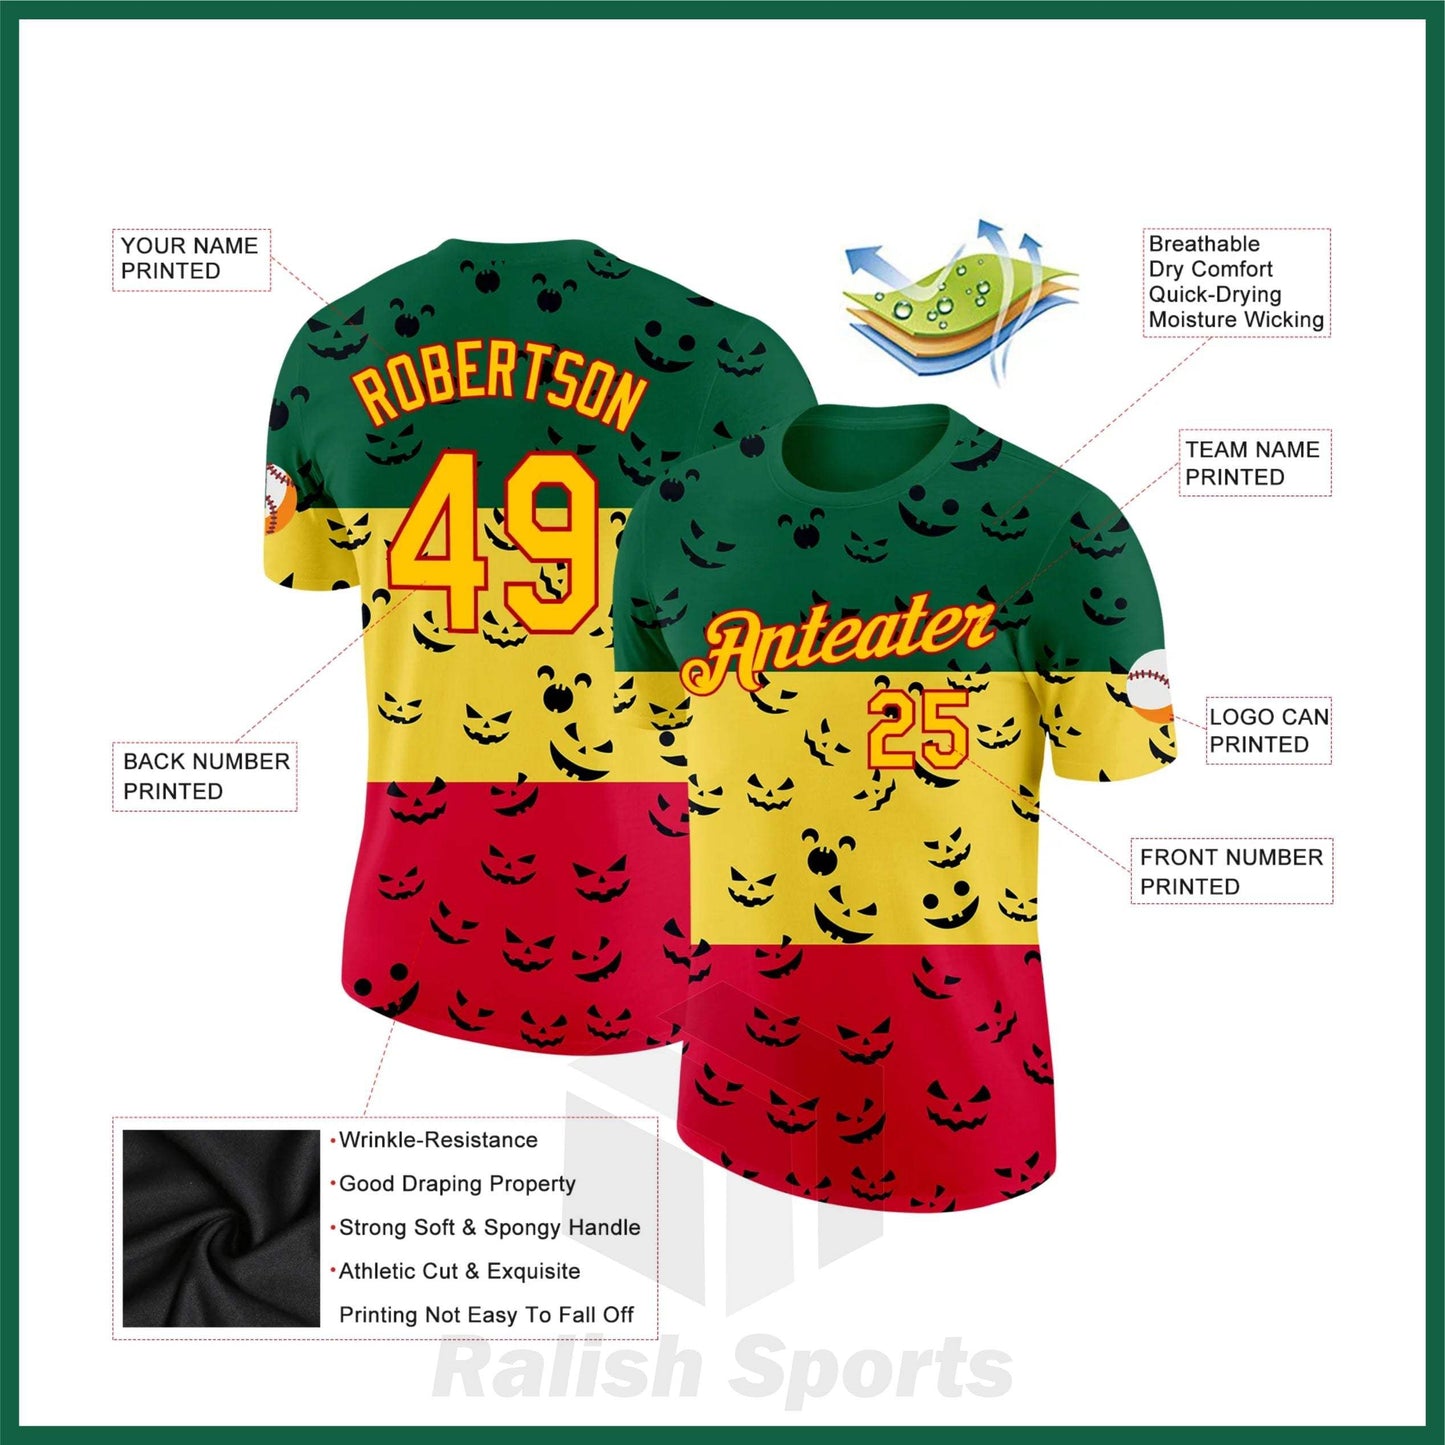 Custom Green Yellow-Red 3D Pattern Design Black History Month Performance T-Shirt - Ralish Sports